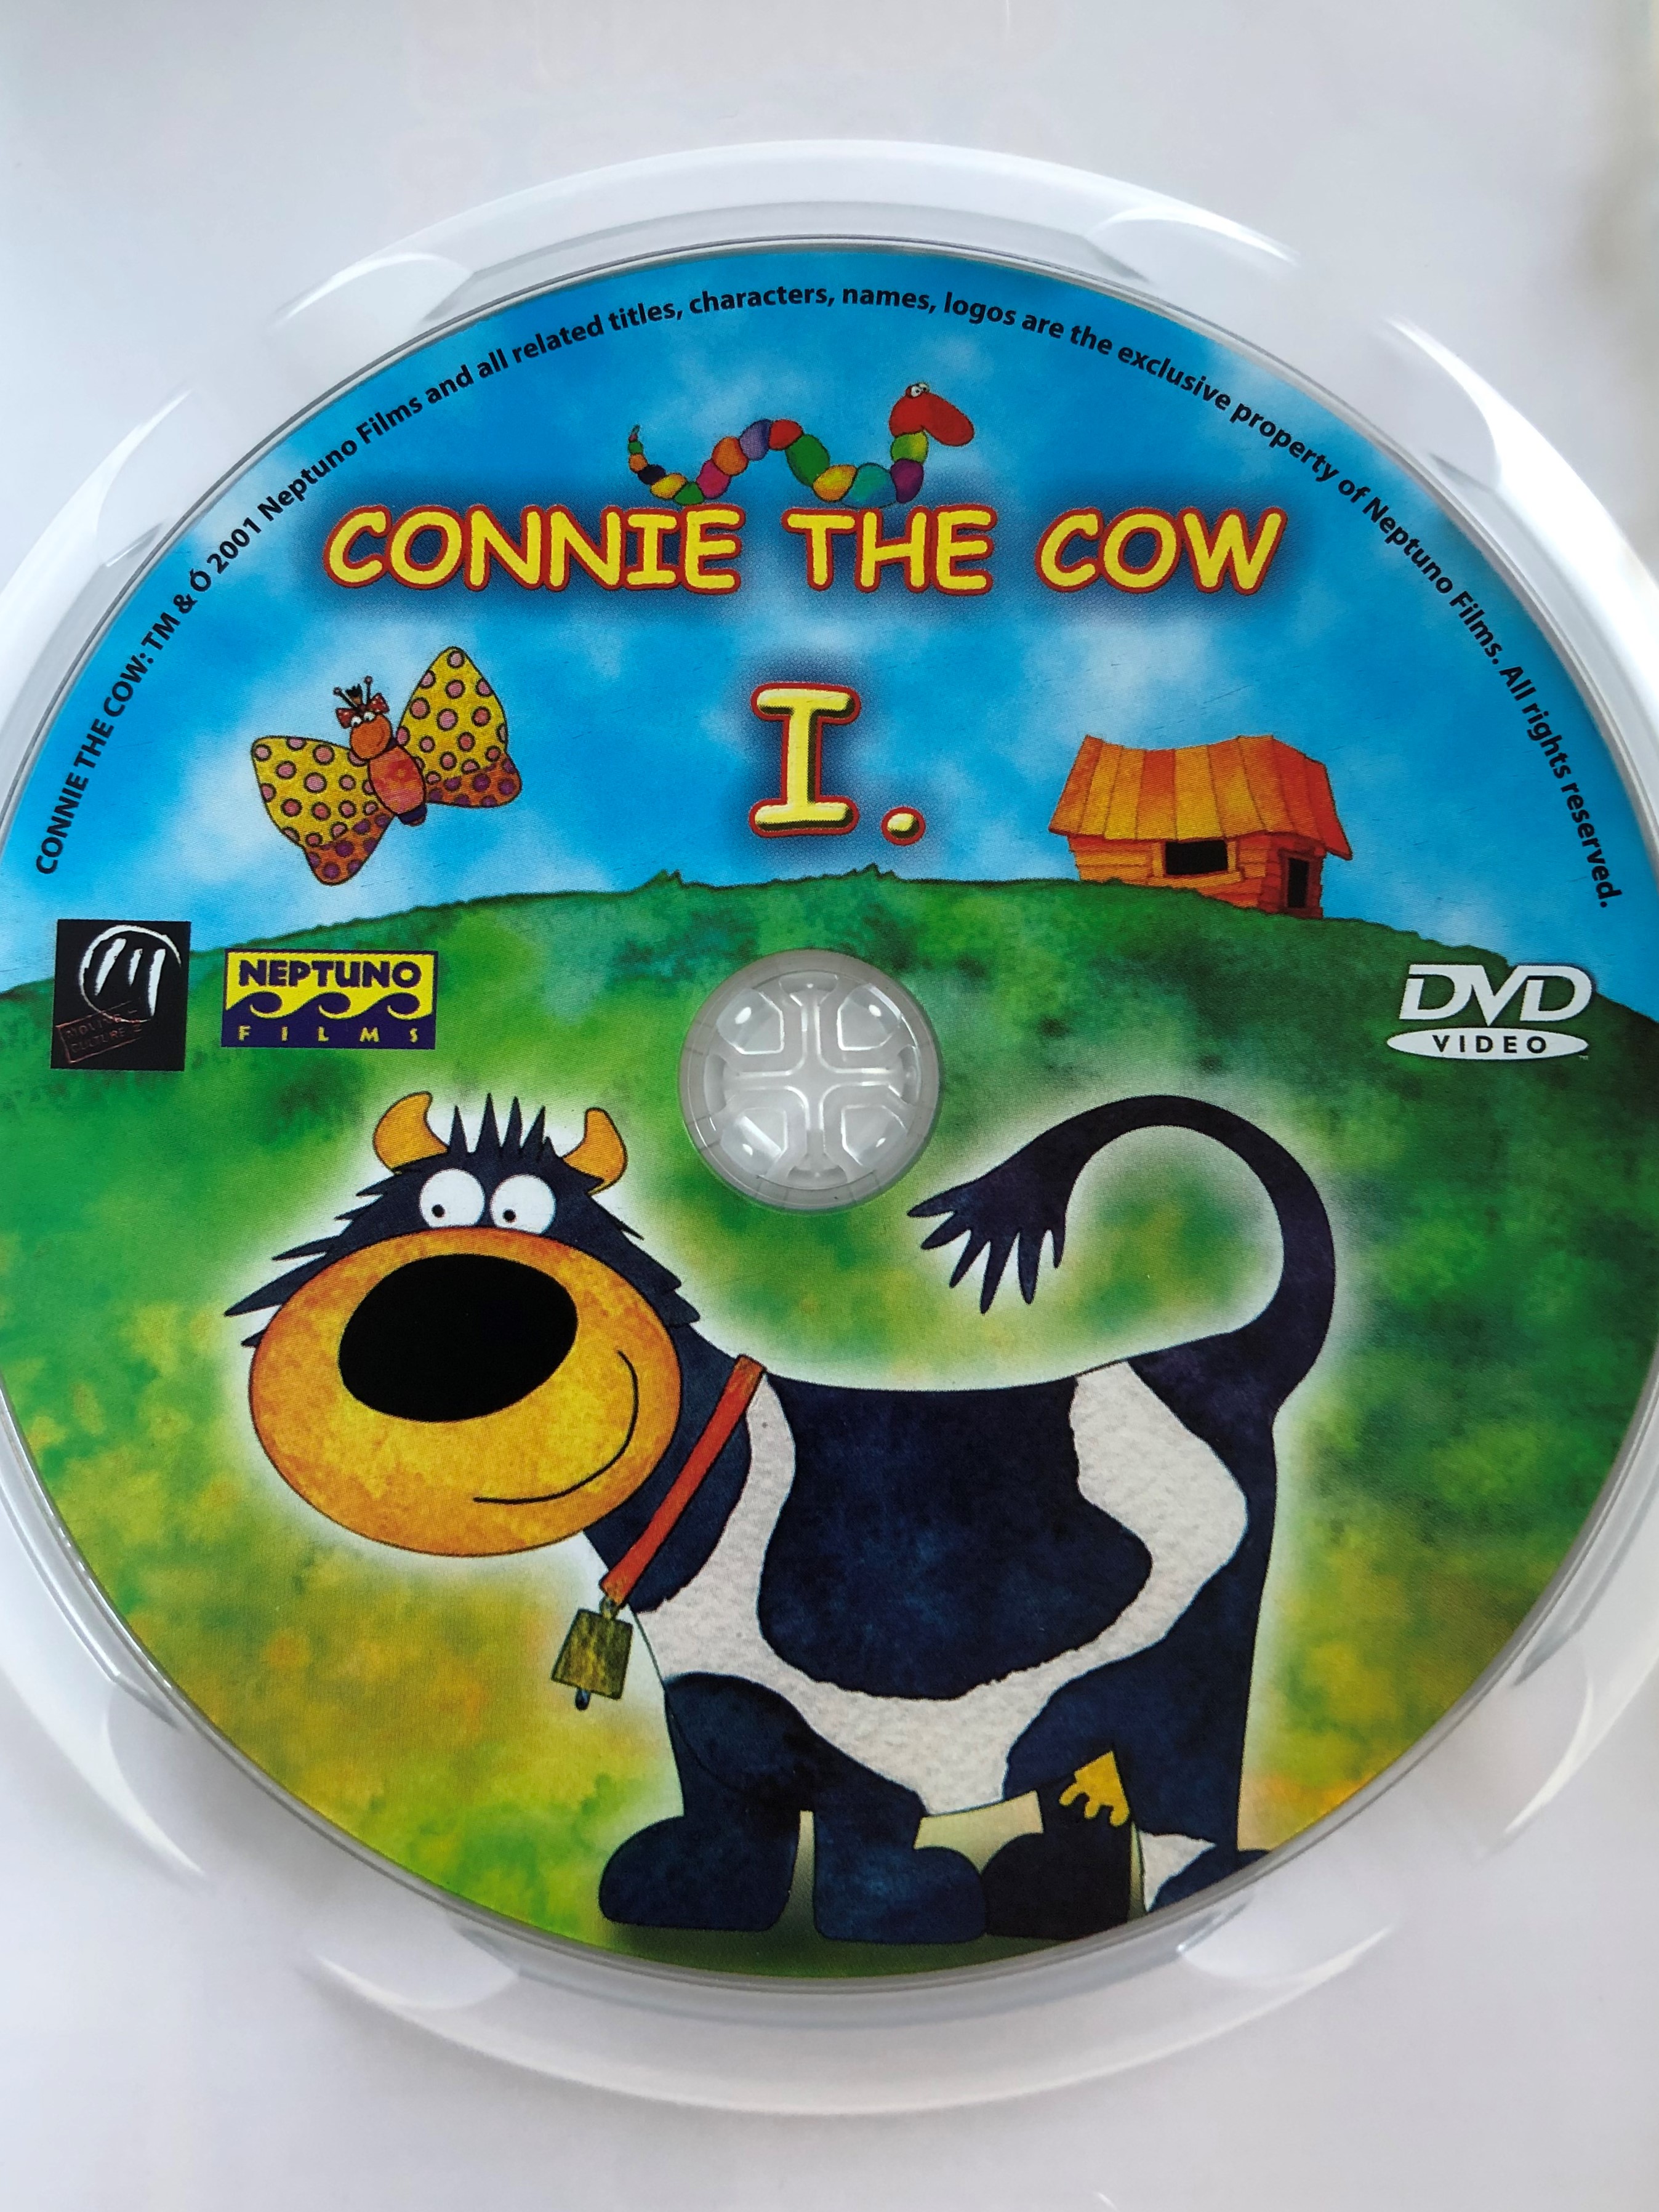 connie-the-cow-dvd-2001-connie-a-boci-i-directed-by-joseph-l.-viciana-s-josp-roig-boada-producer-kristina-brandner-children-s-television-series-2-.jpg